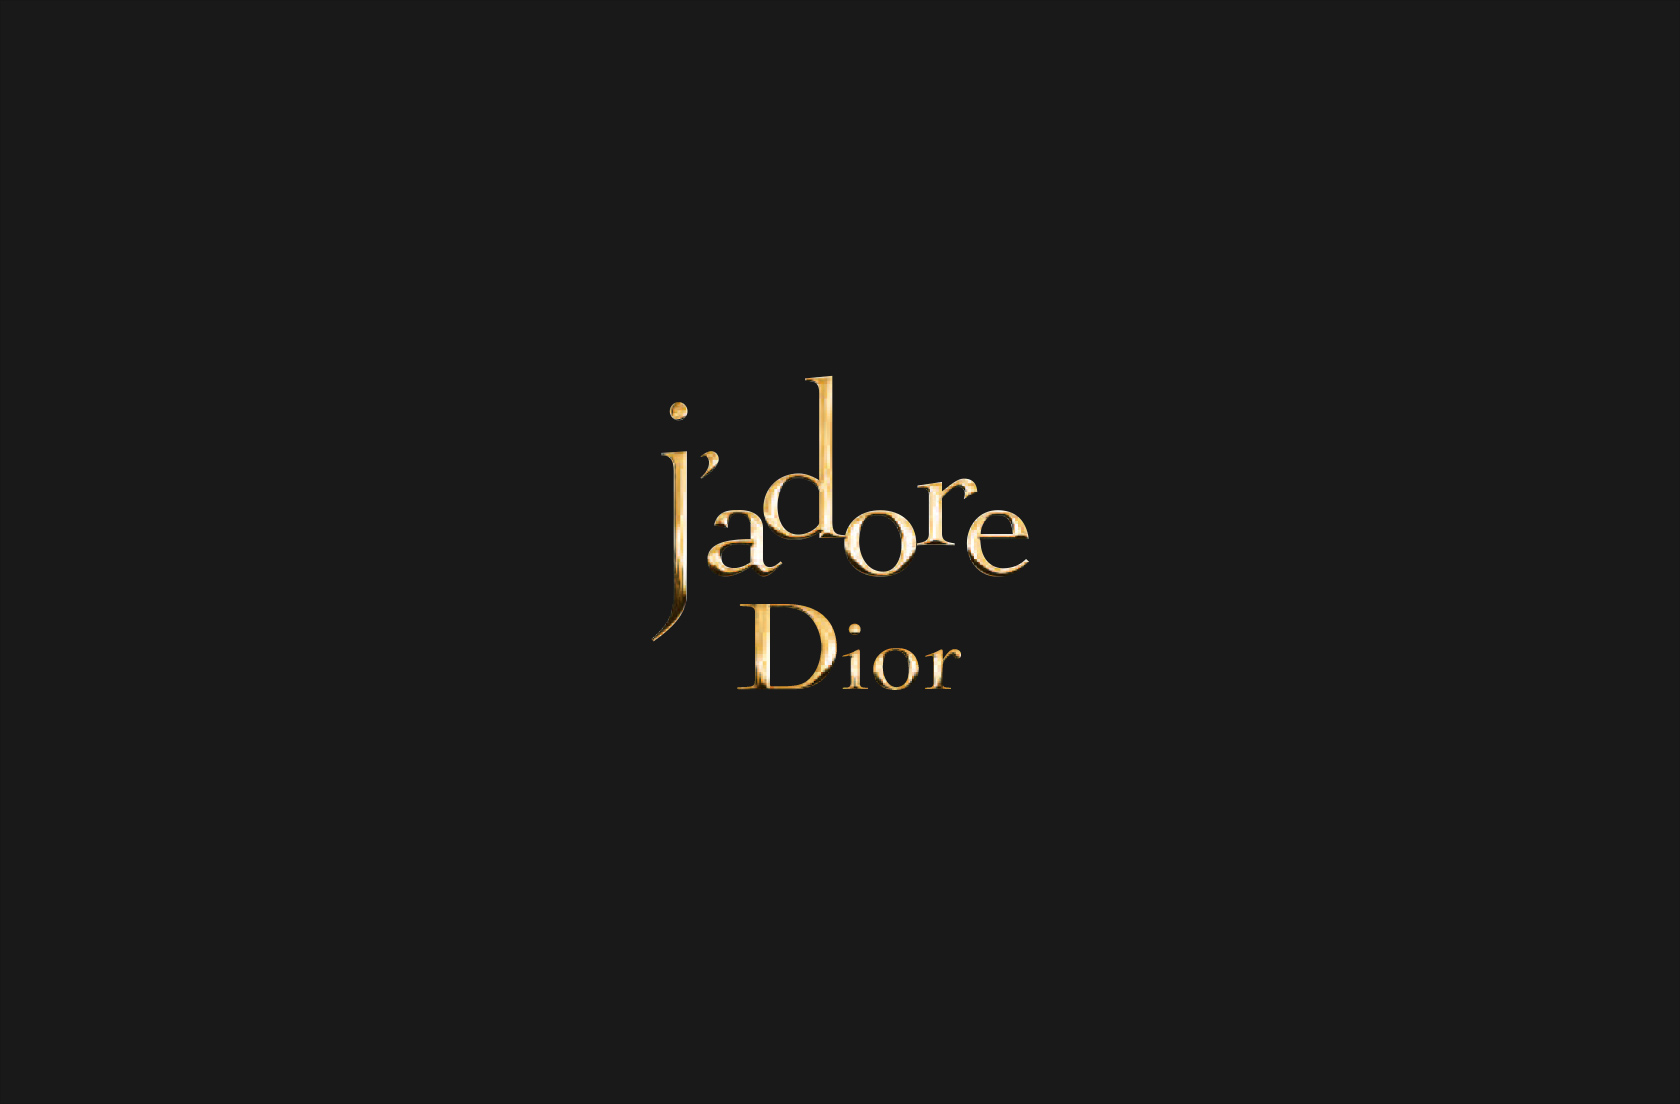 Dior_Jadore_2x